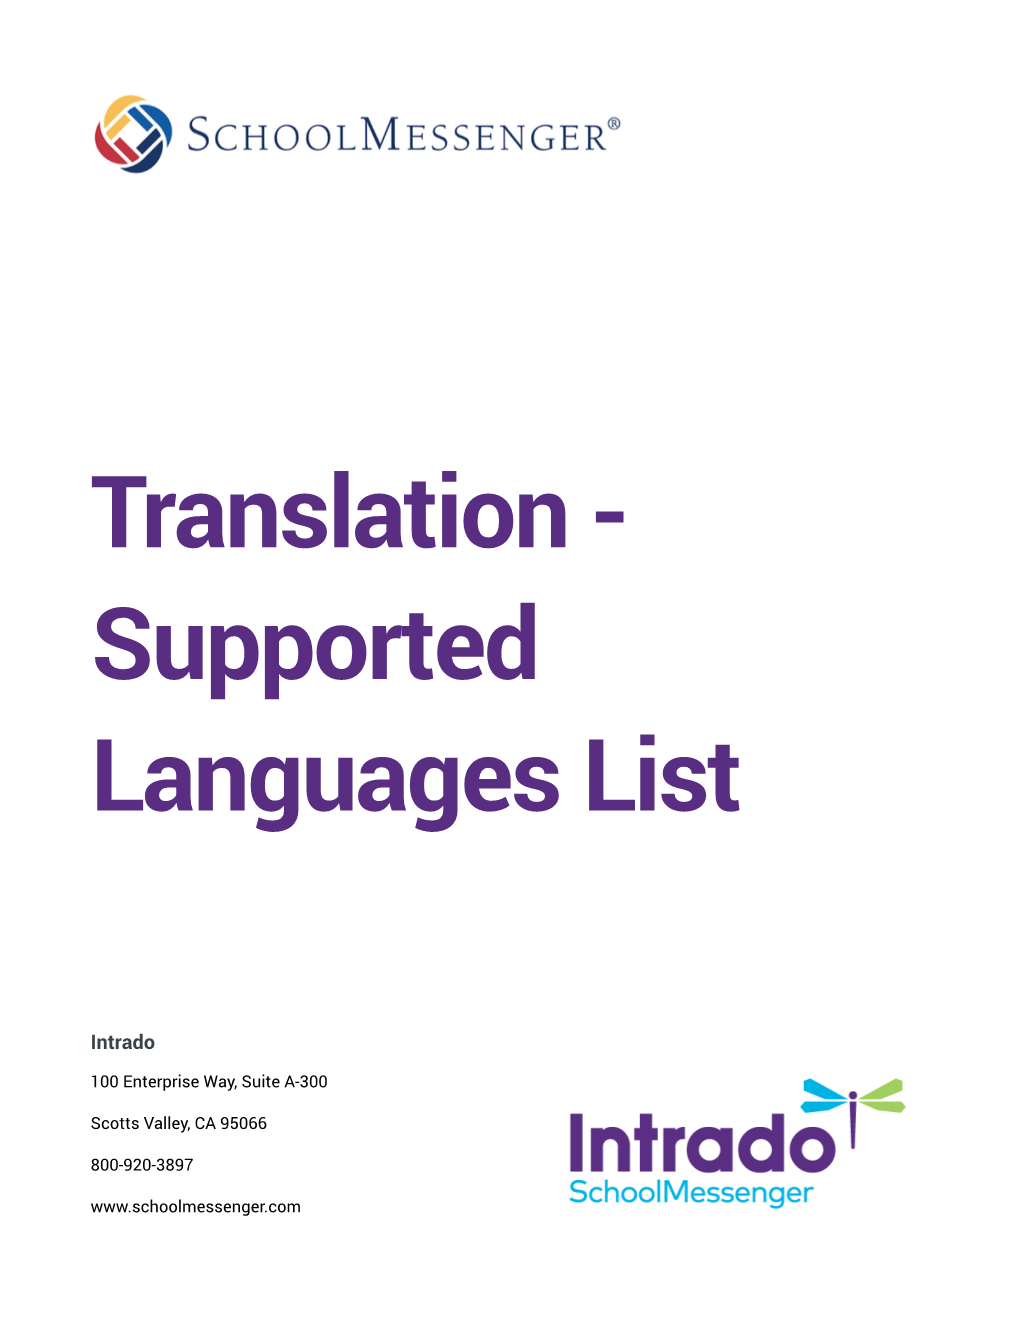 Translation - Supported Languages List